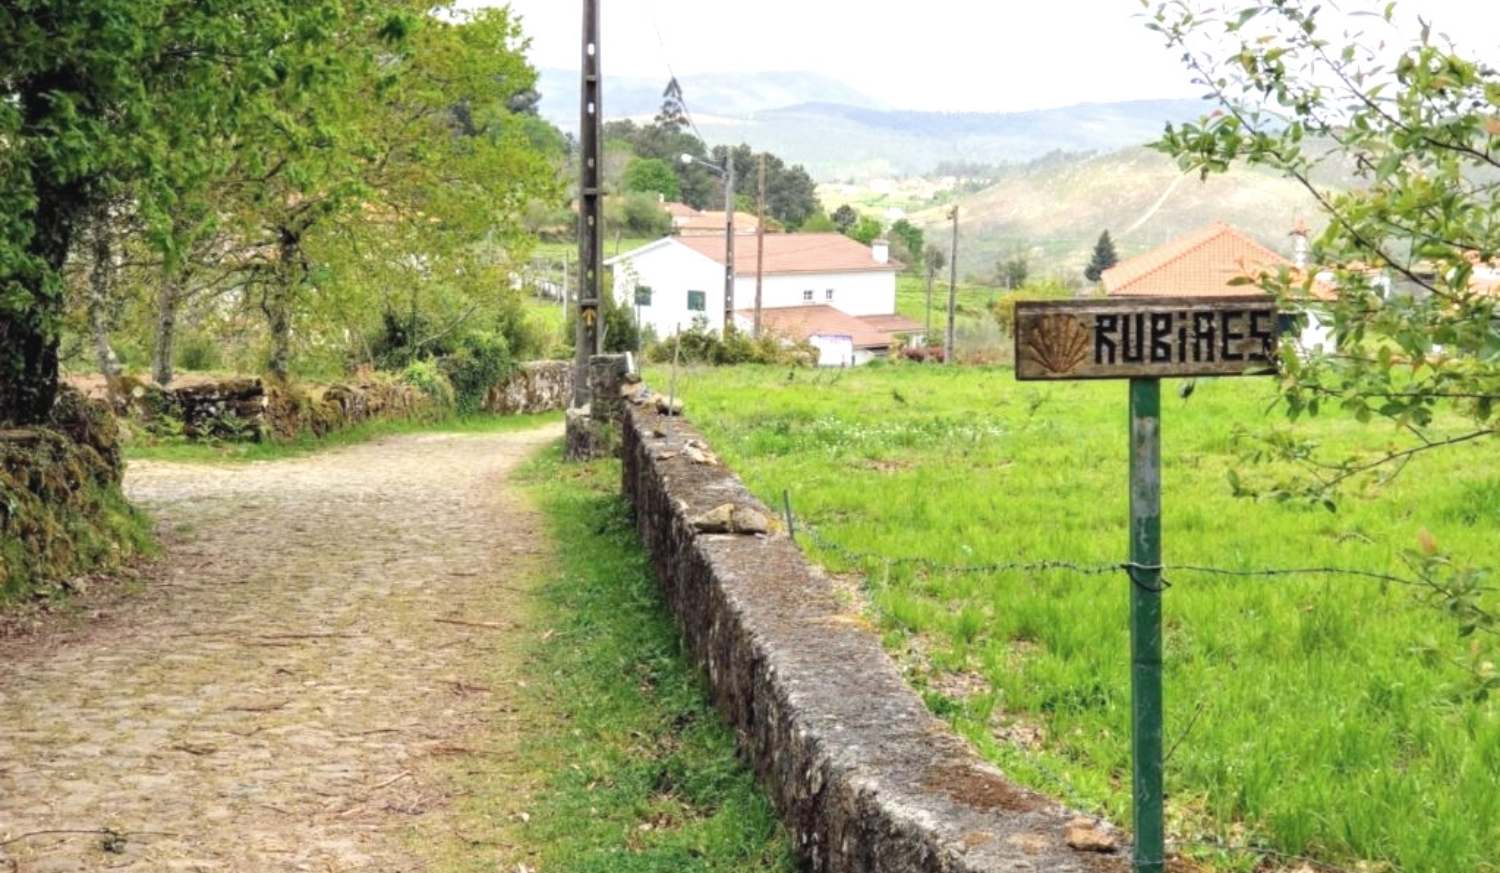 Rubiaes Portuguese Way